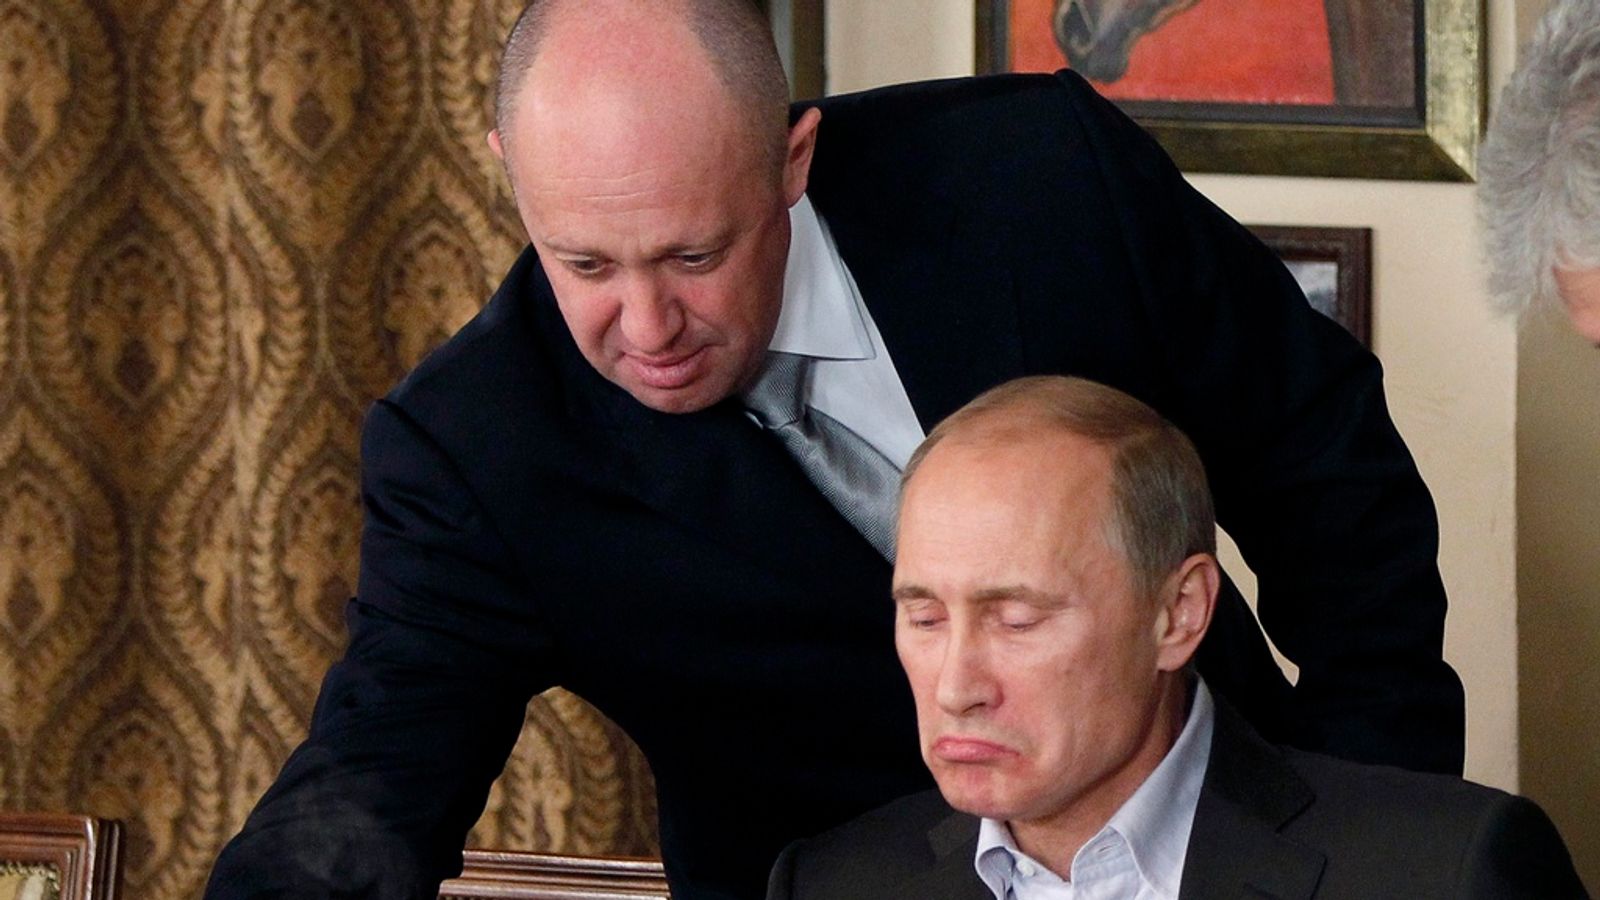 Vladimir Putin sends condolences to family after Yevgeny Prigozhin 'death' in plane crash